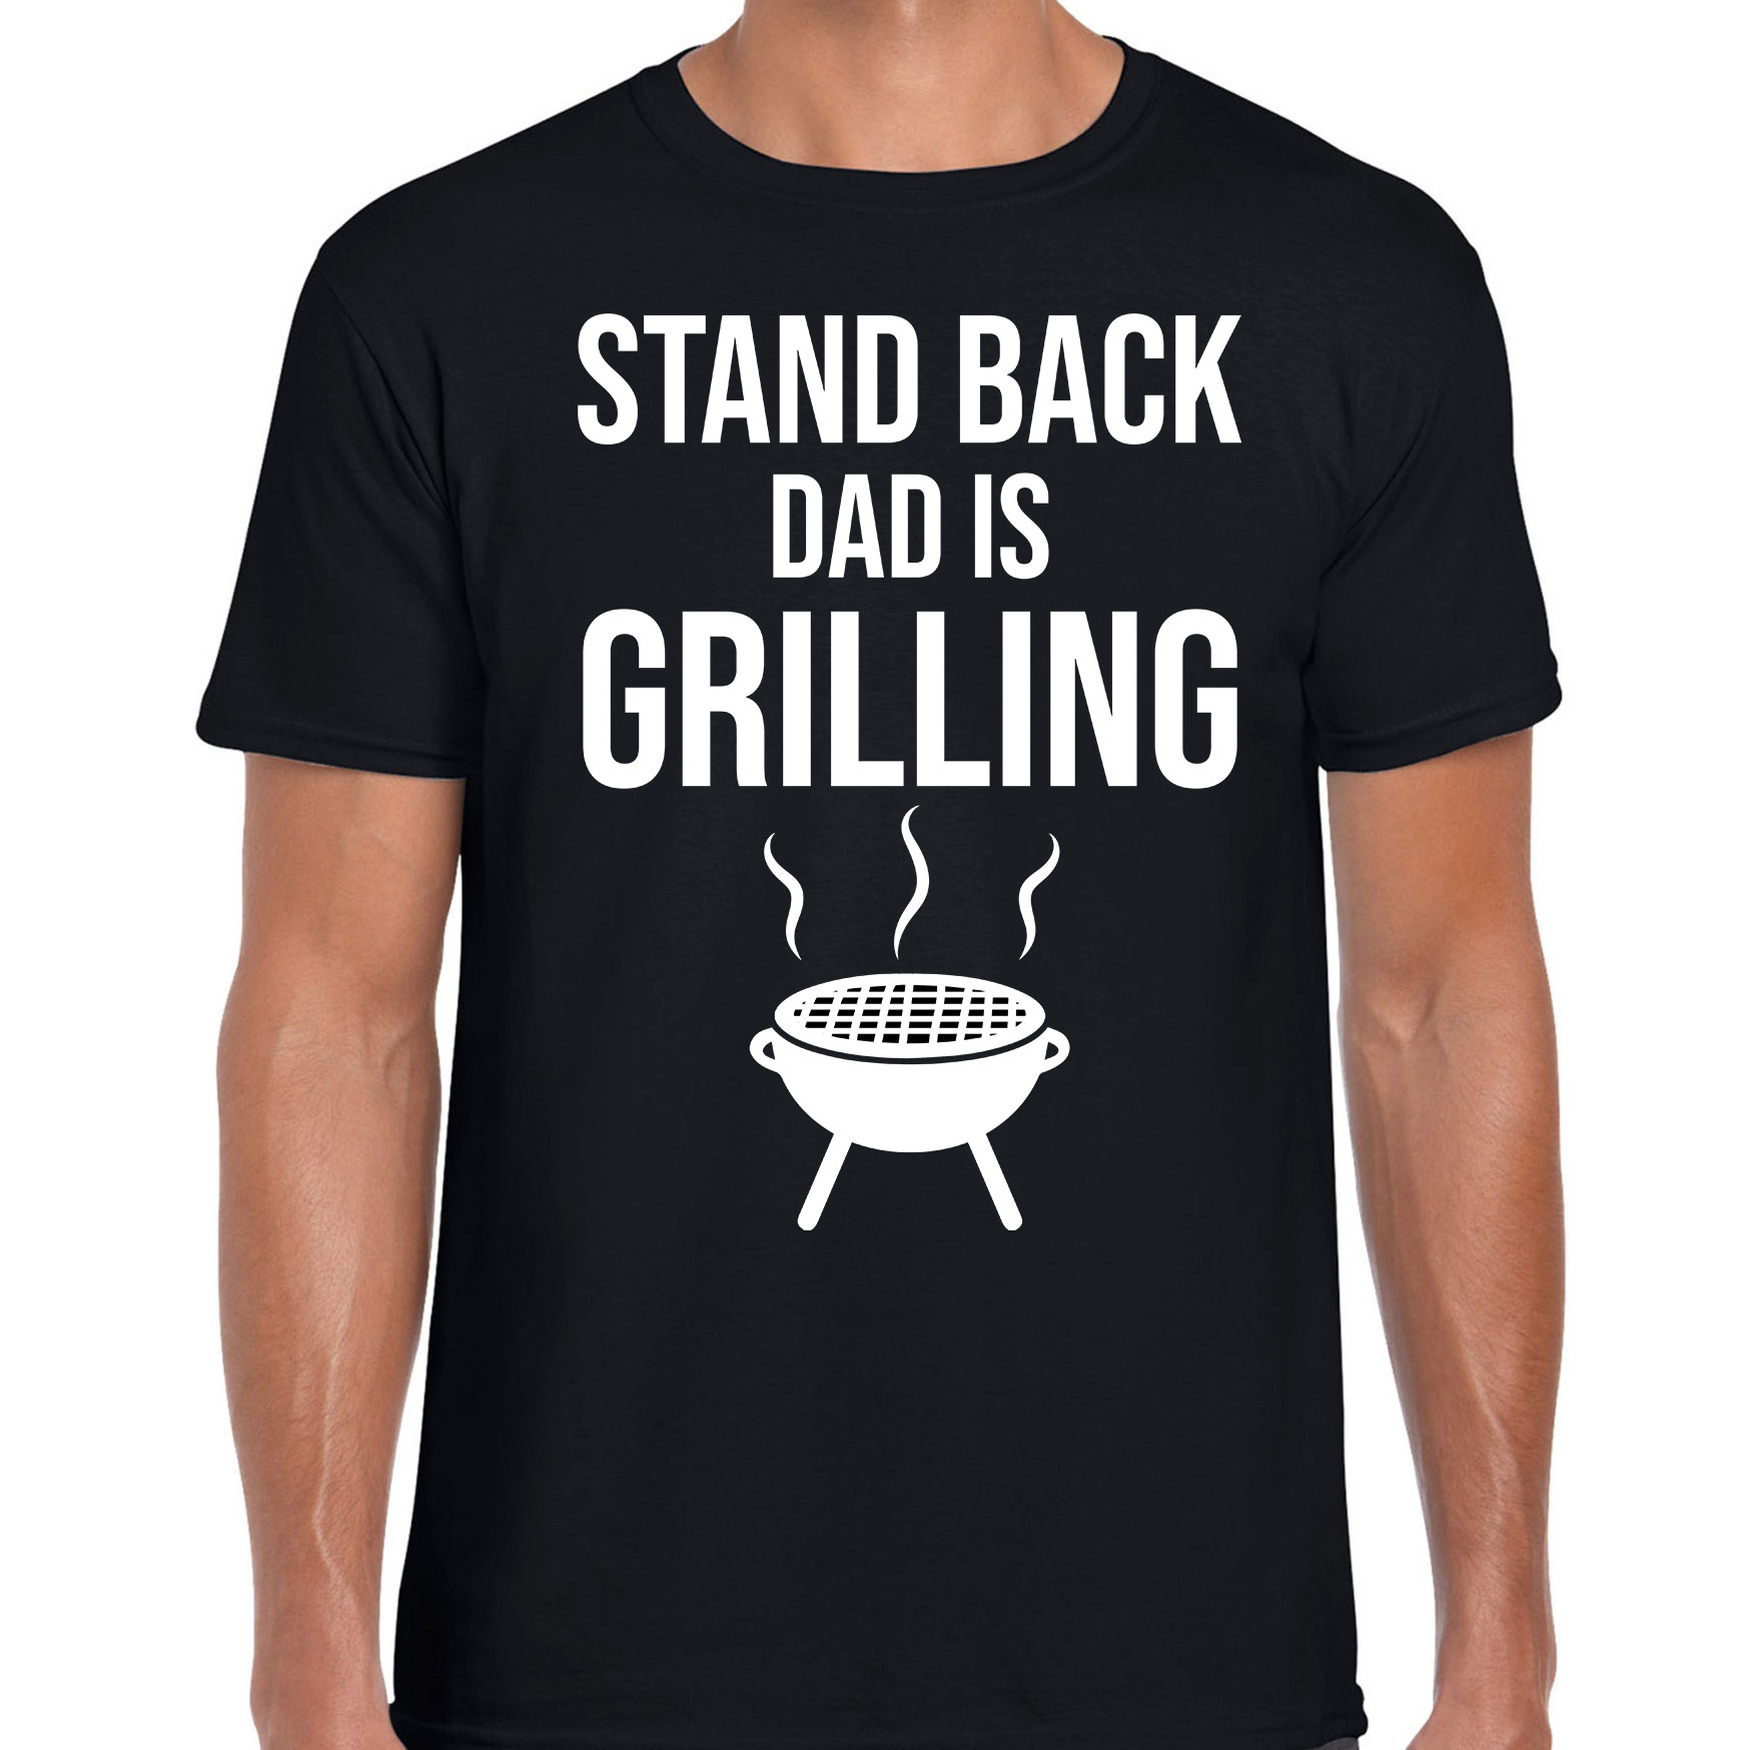 Stand back dad is grilling barbecue-bbq t-shirt zwart voor heren